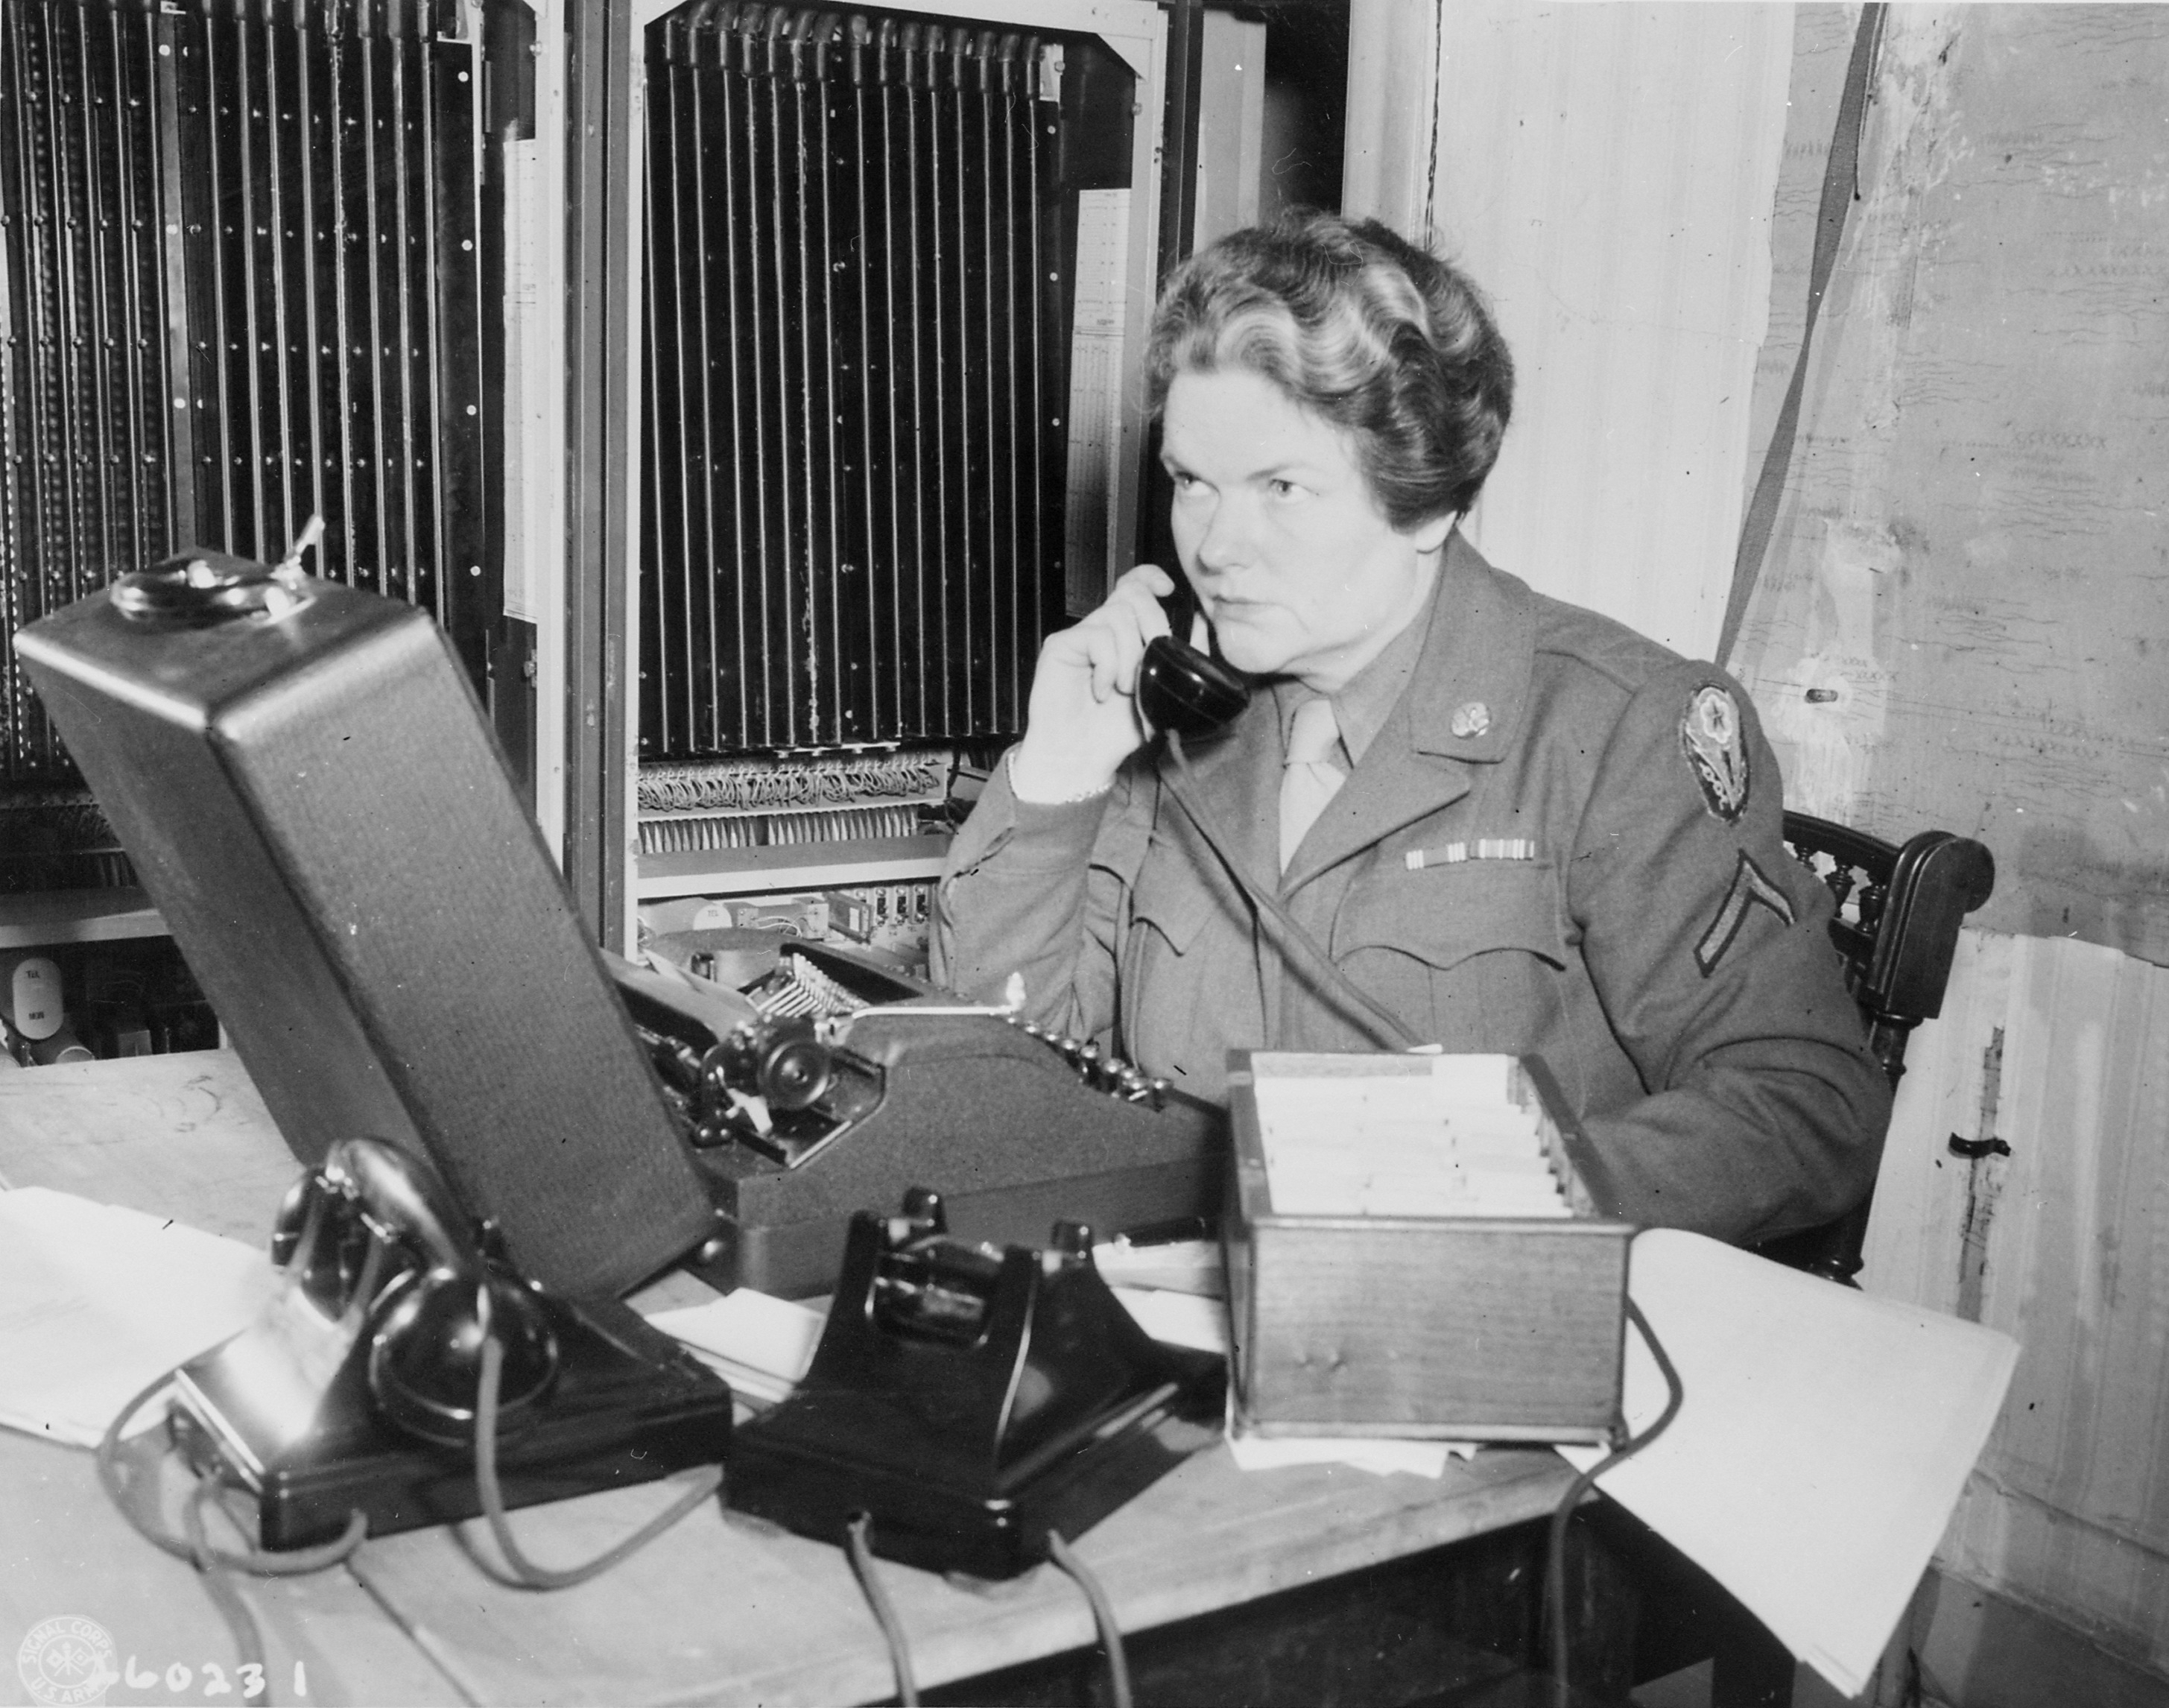 WAC Telephone Operator at Potsdam Conference